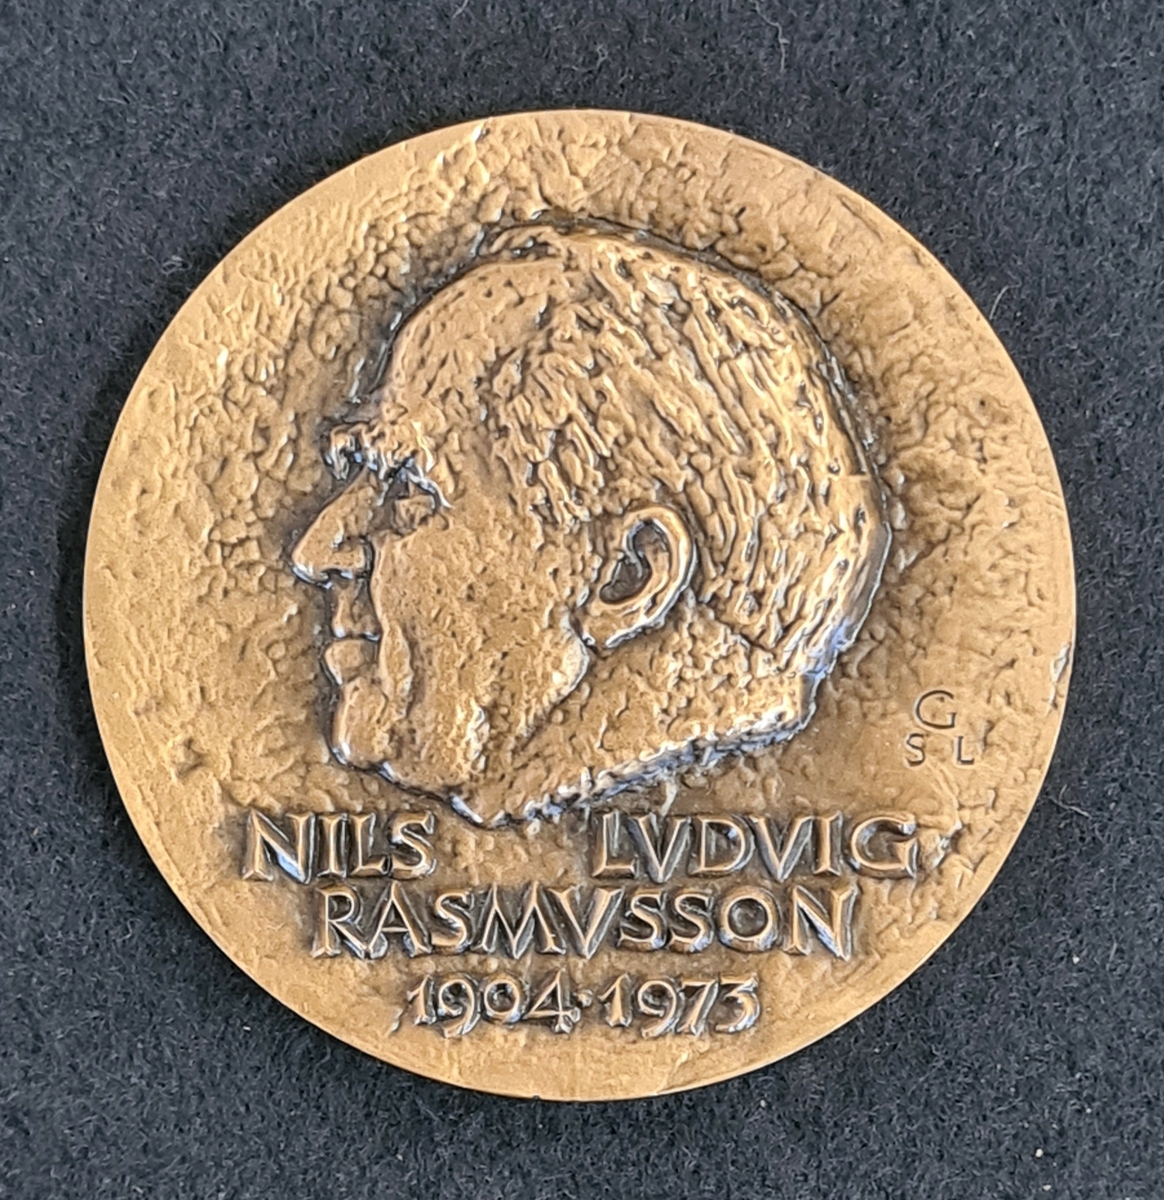 Rasmusson, N.L. (1904 - 1973)